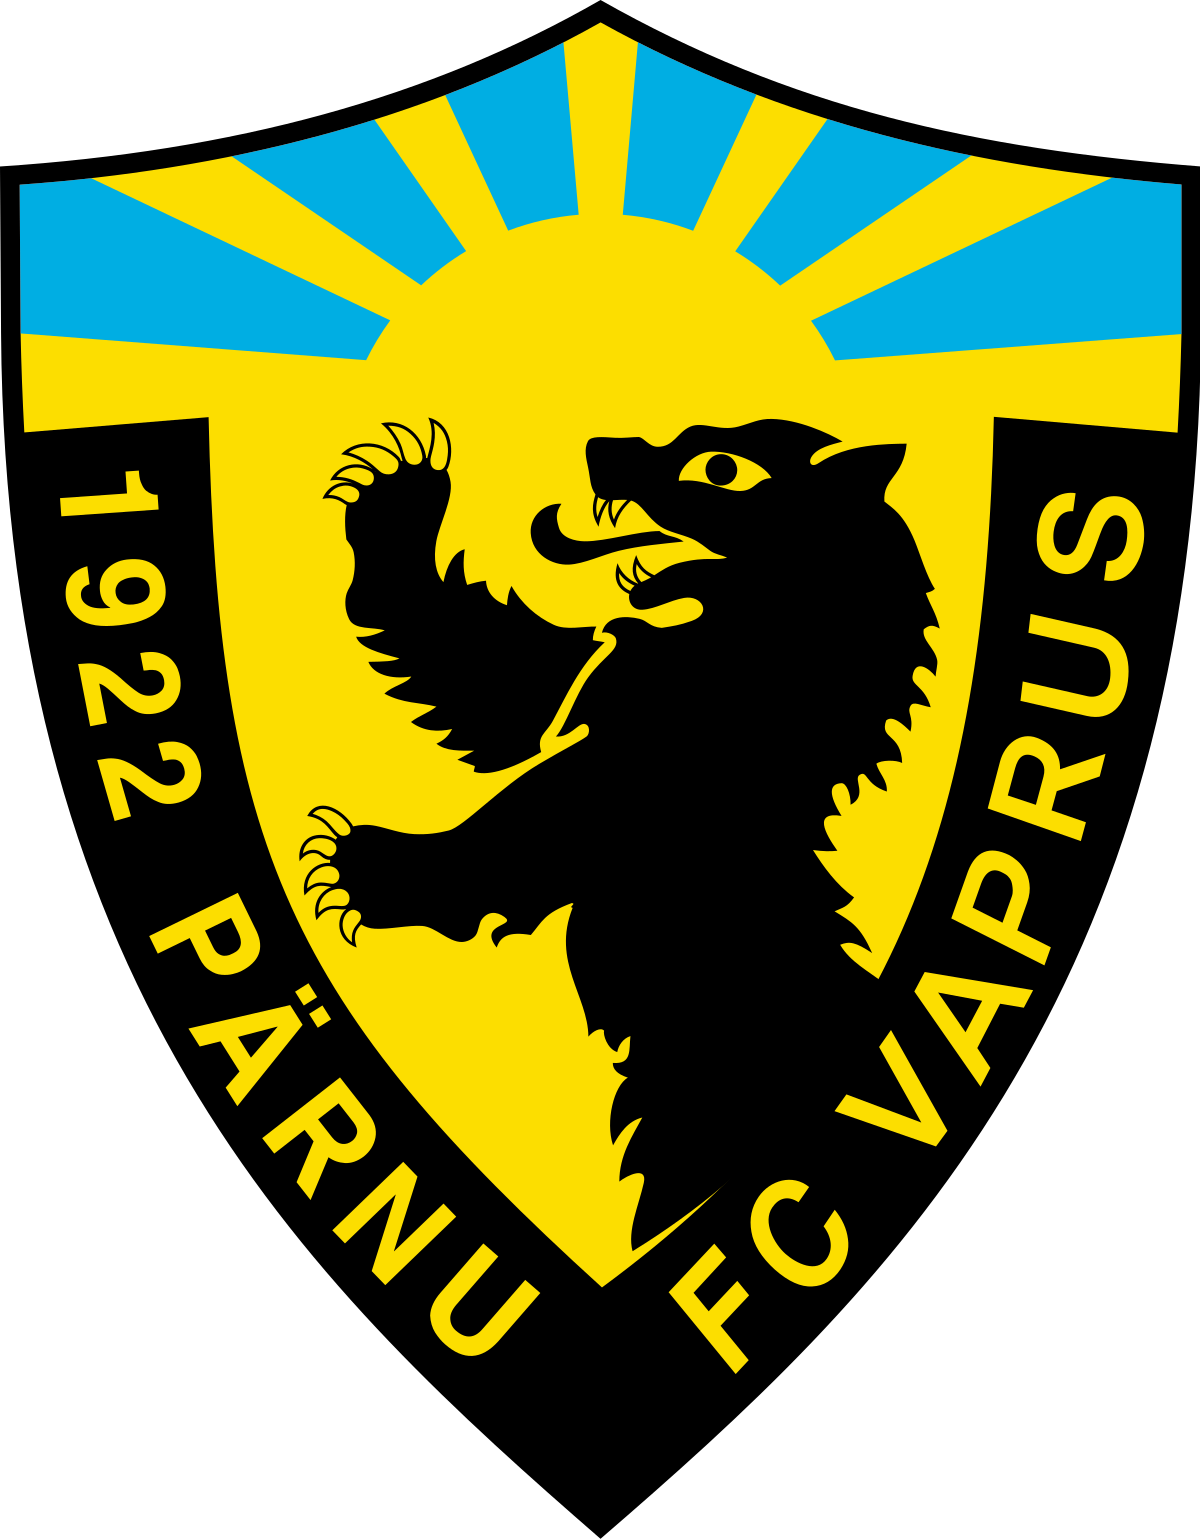 Wappen Pärnu JK Vaprus